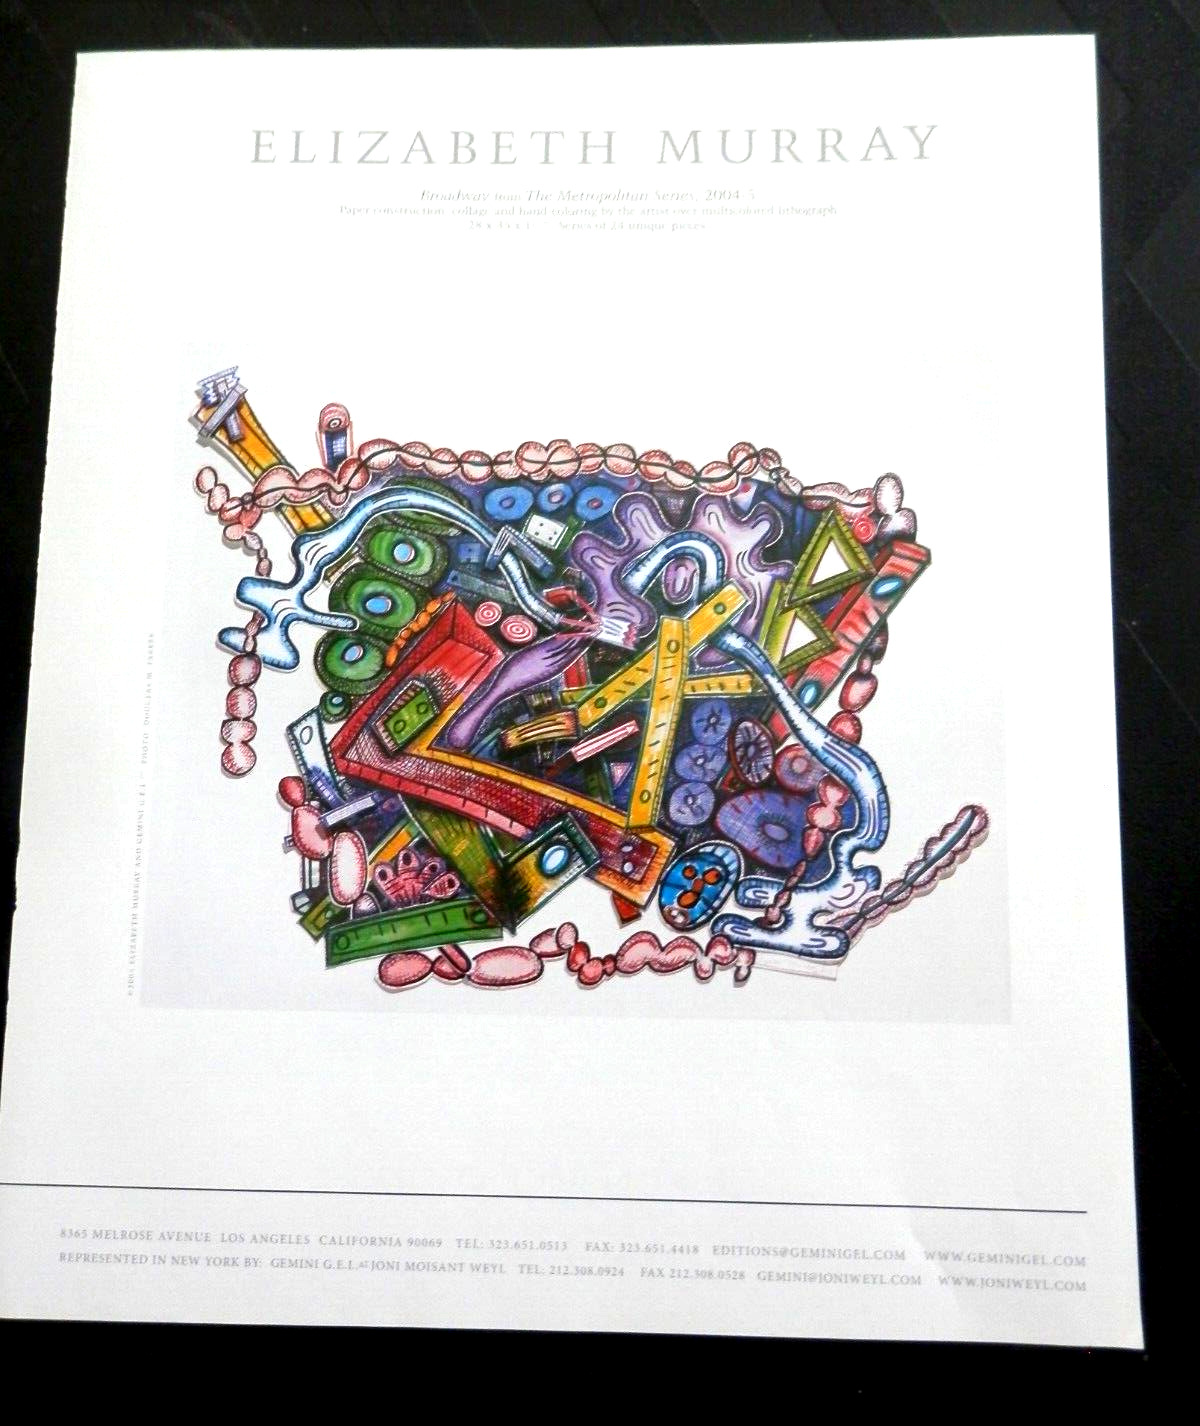 2005 PRINT AD, Elizabeth Murray Art Exhibit, Broadway, The Metropolitan Series